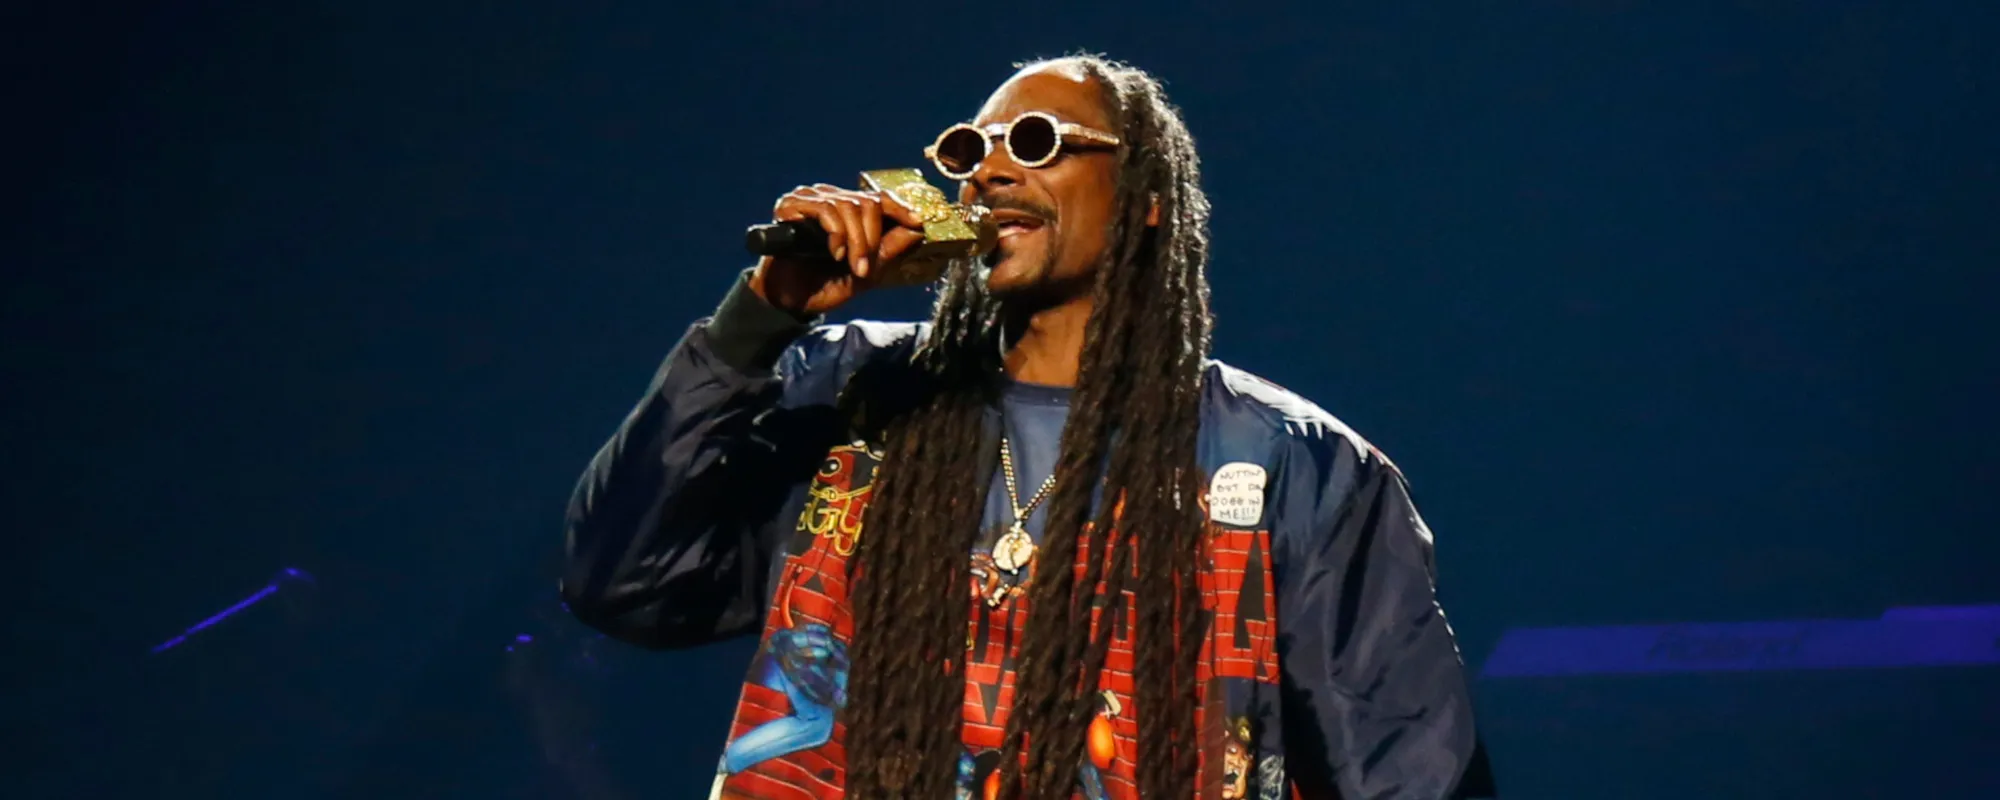 Snoop Dogg and Eminem to Give Metaverse-Inspired Performance at Upcoming VMAs